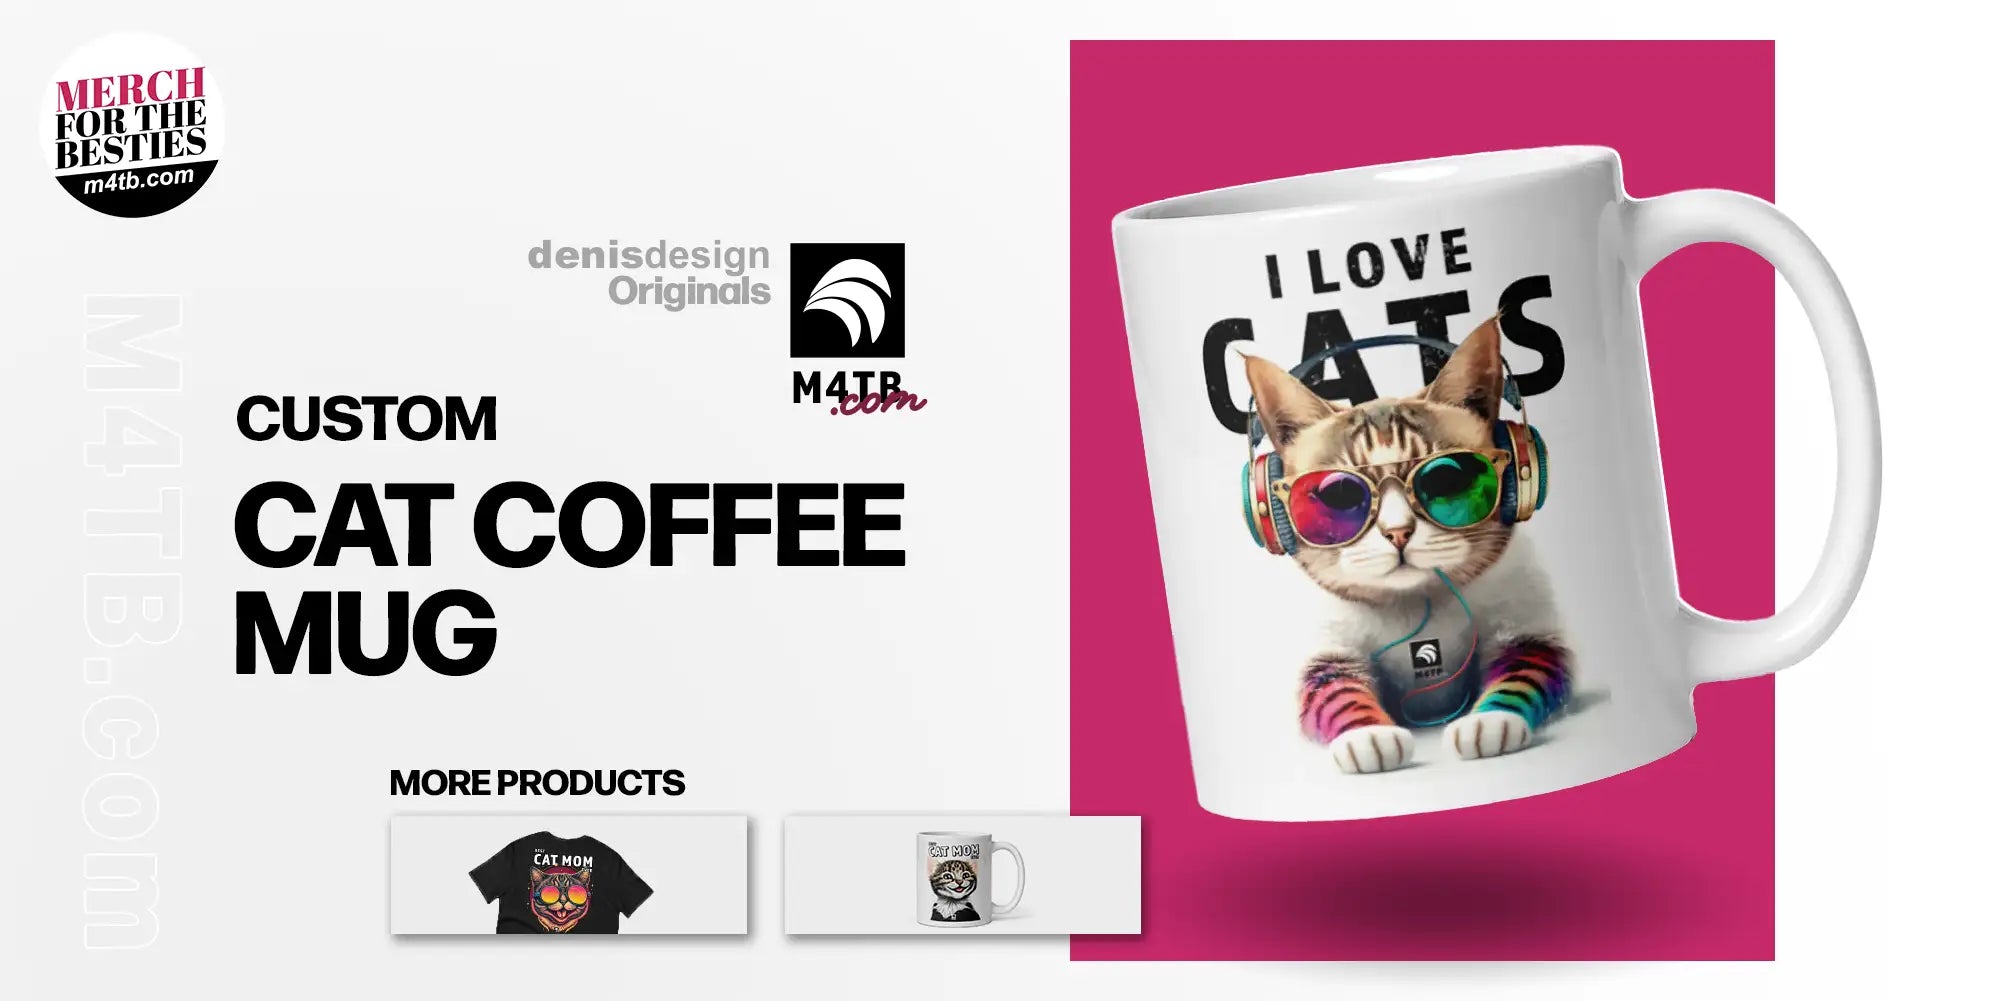 Cat Lover Gift Idea - Men & Women - Coffee Mug